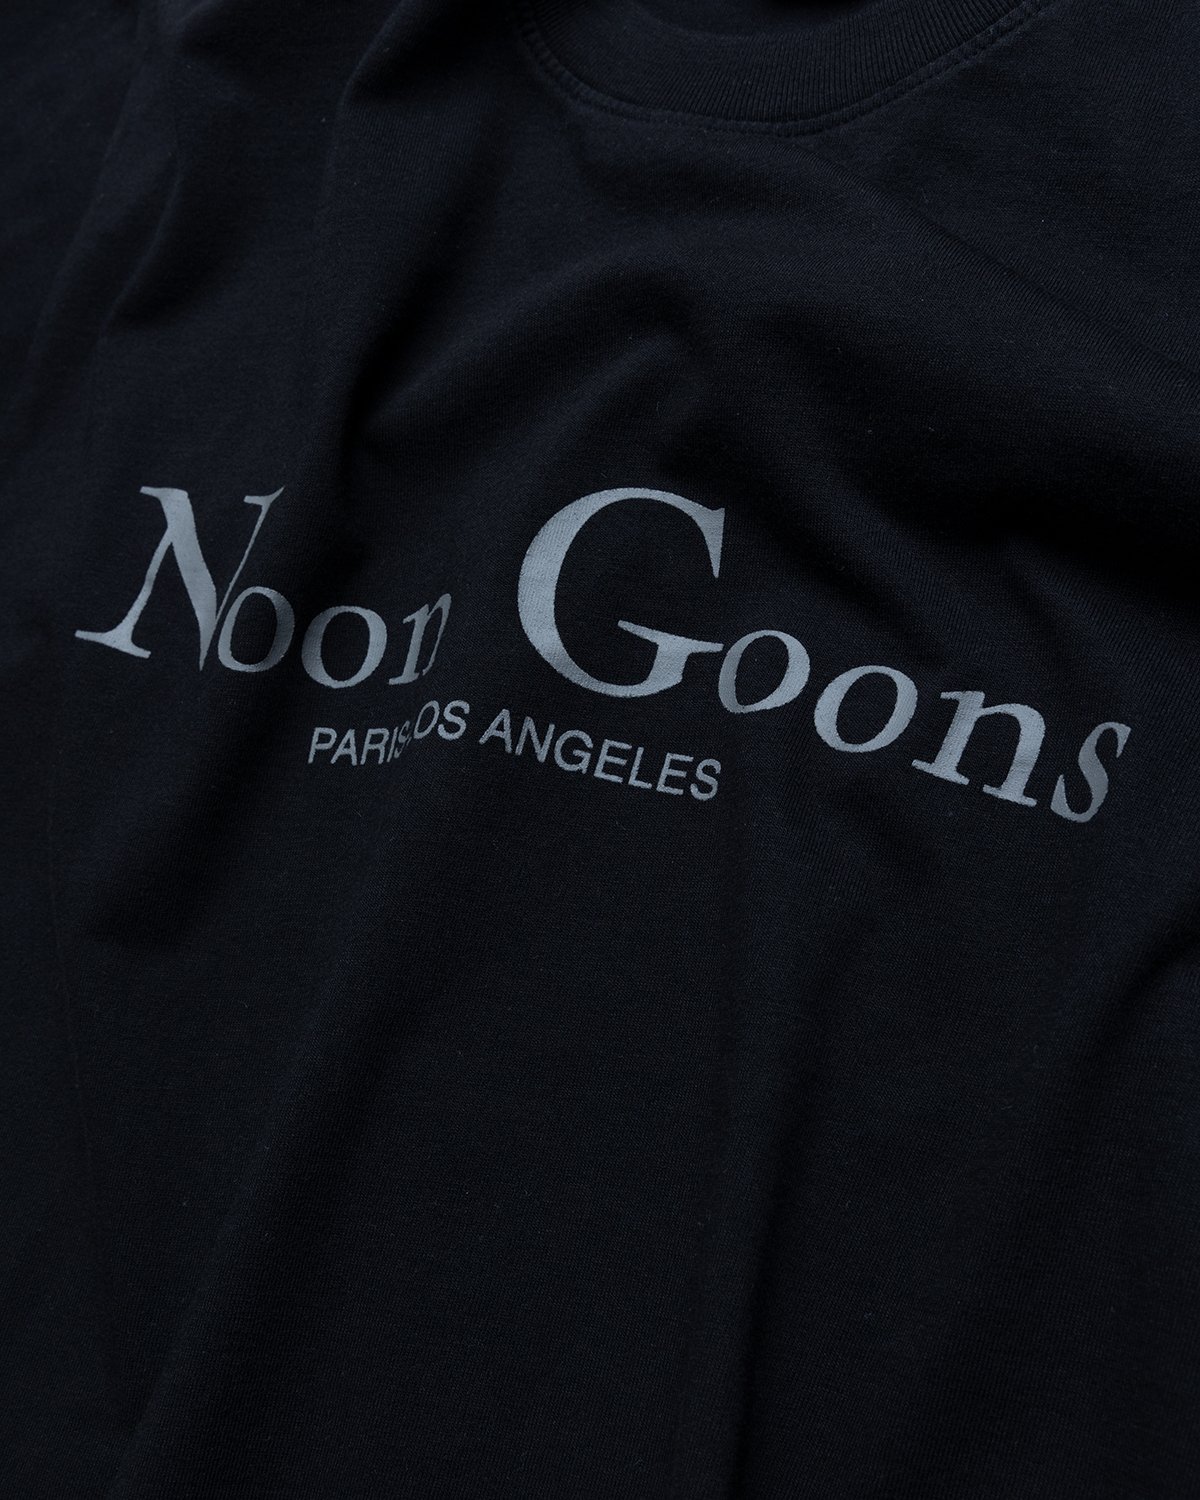 Noon Goons - Sister City T-Shirt Black - Clothing - Black - Image 4